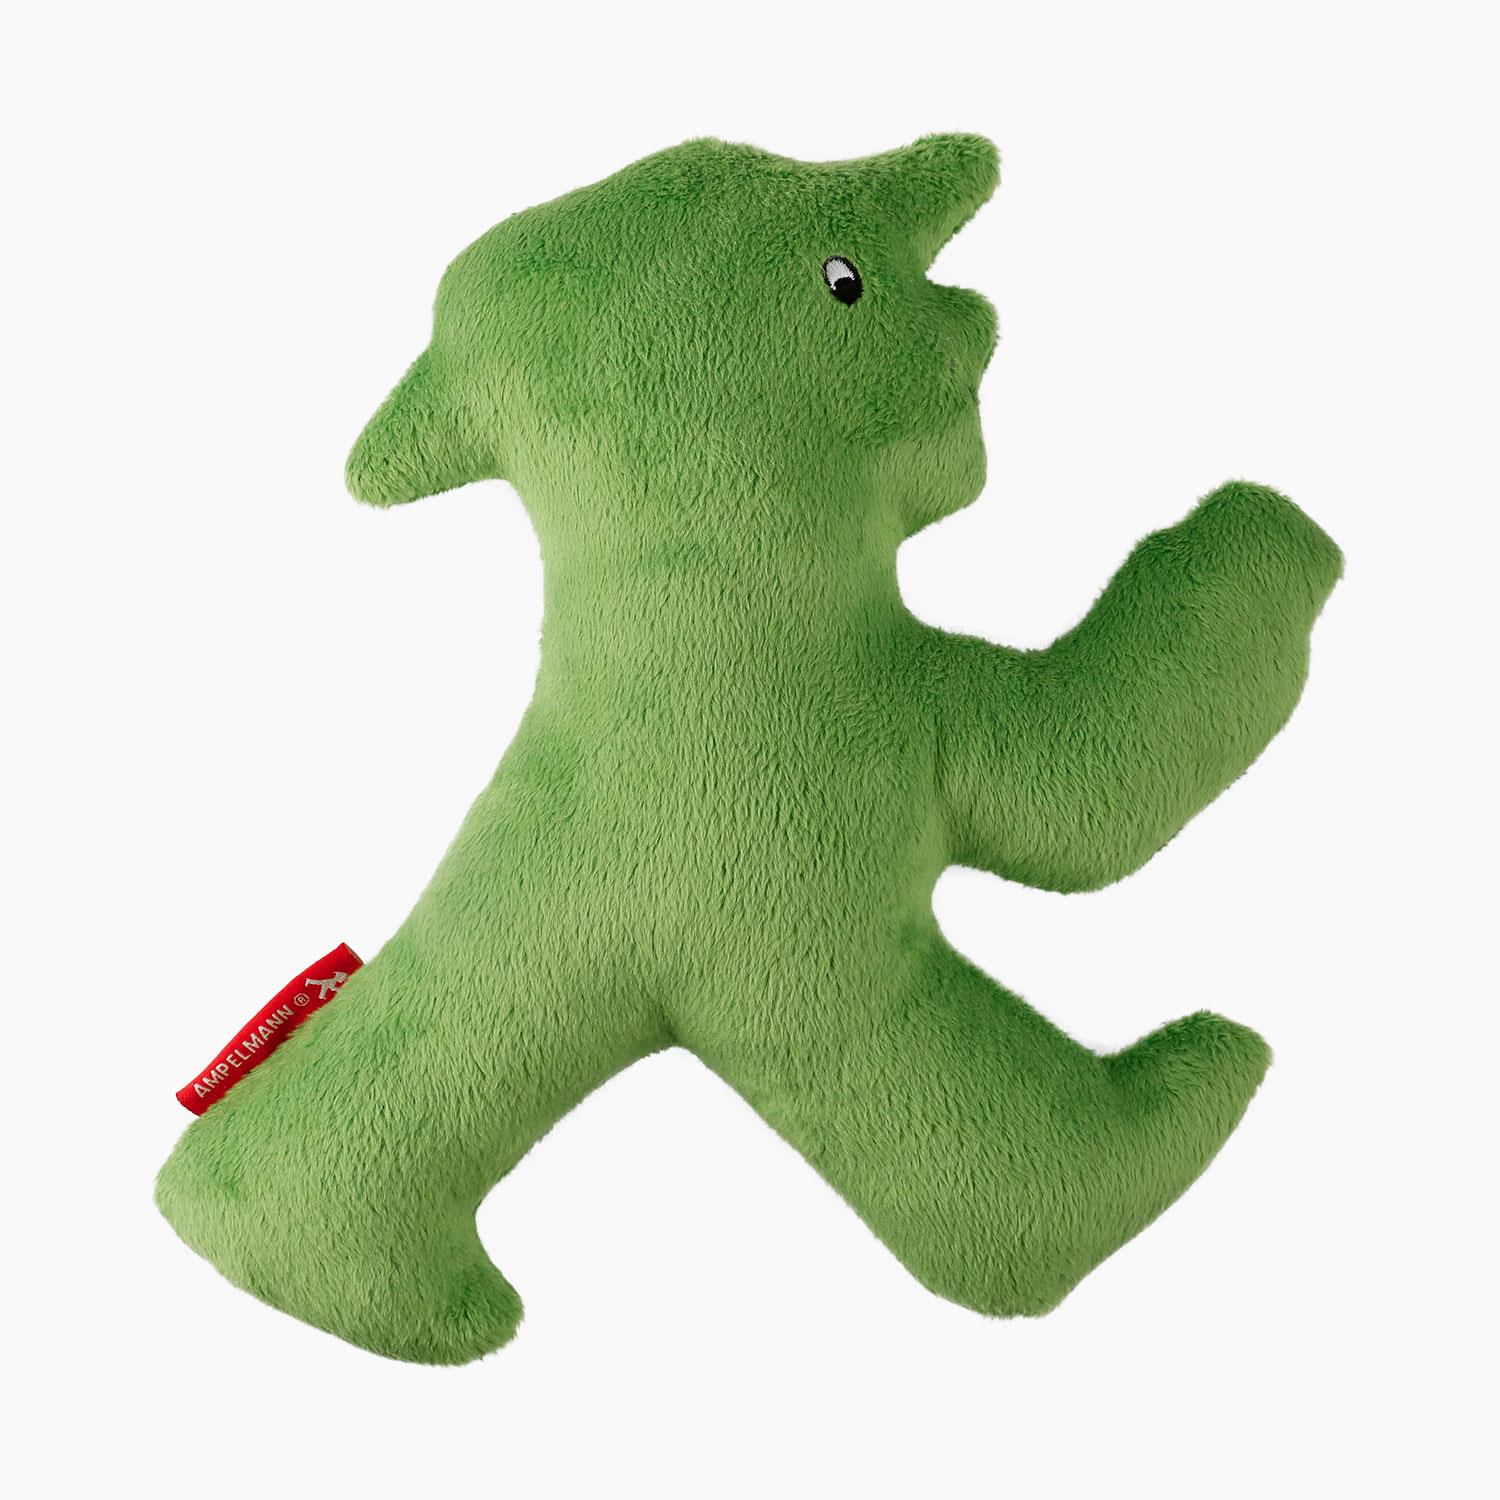 KNUDDELMANN green/ Stuffed Animal